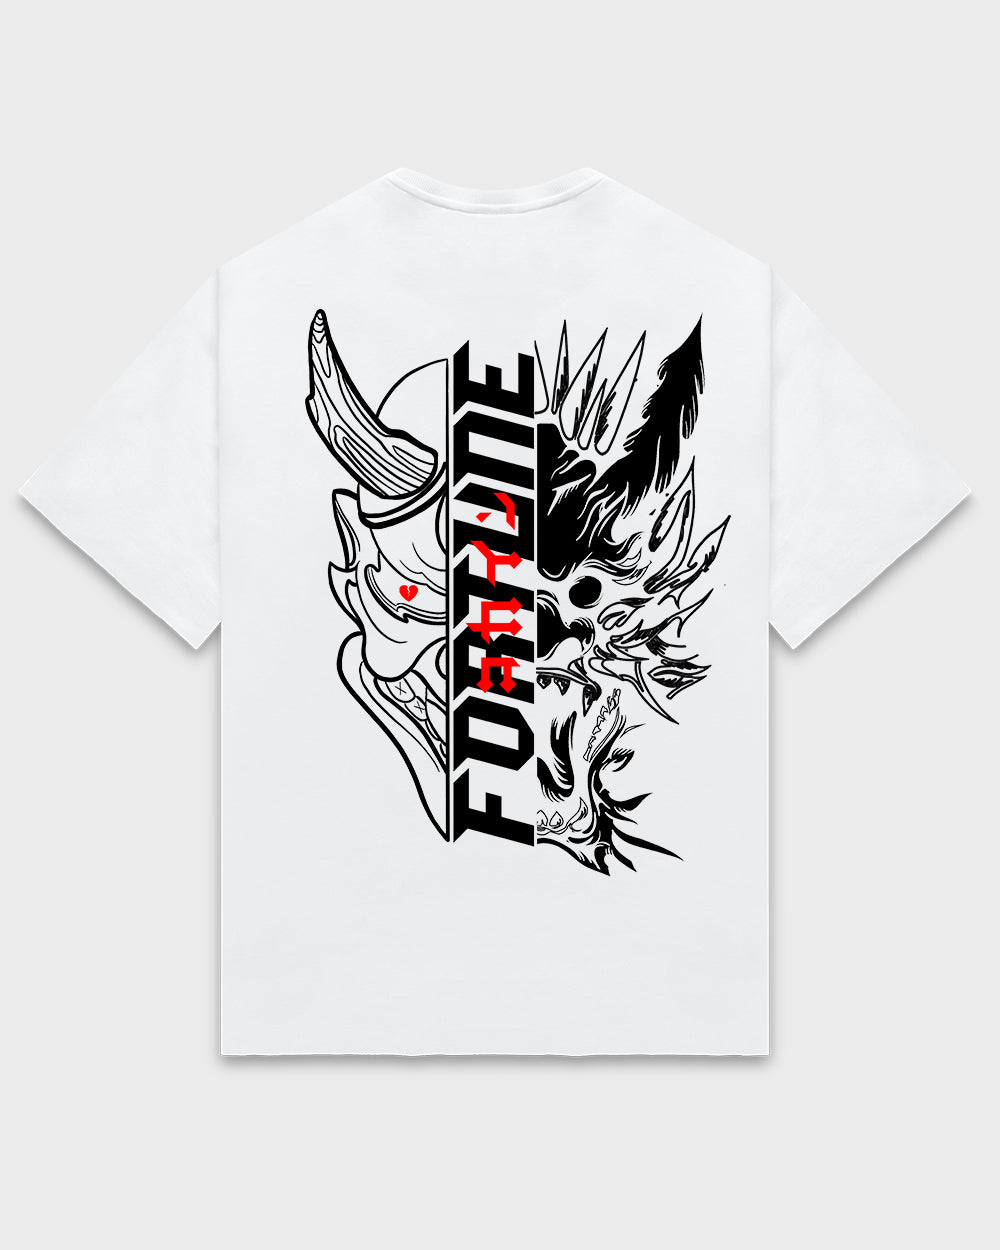 Fortune Gxng x KOKAINE "Collab" T Shirt // White